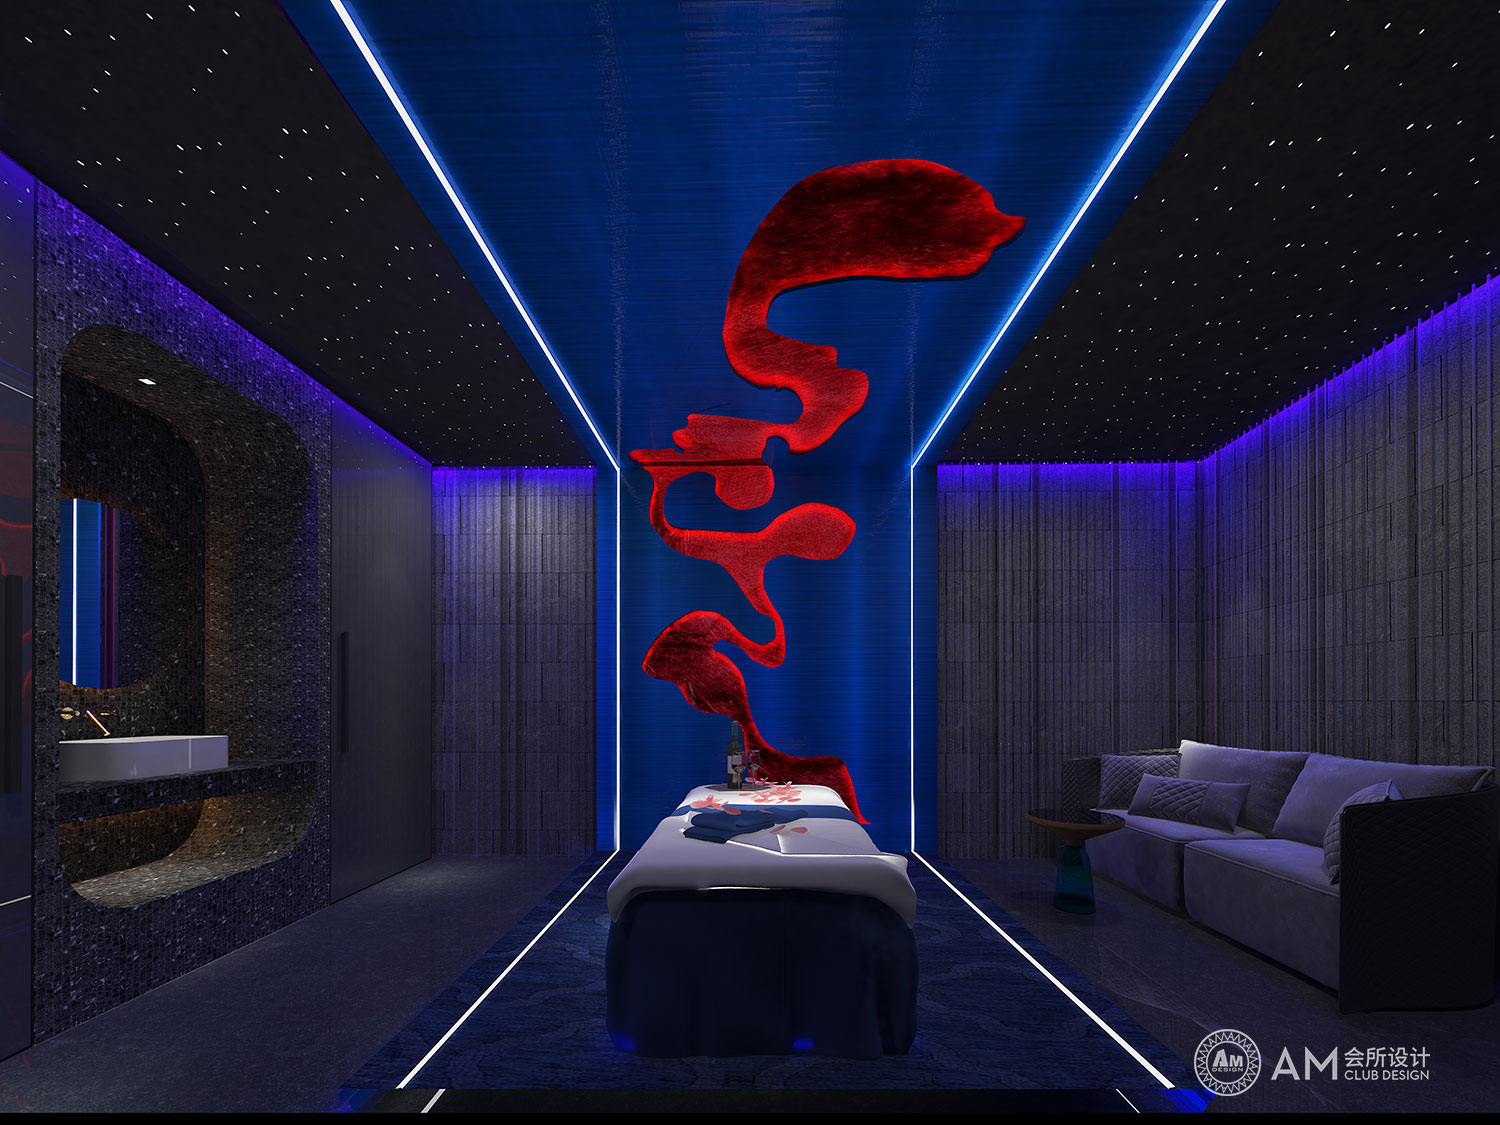 AM DESIGN | Lobby design of men's spa club in Suzhou